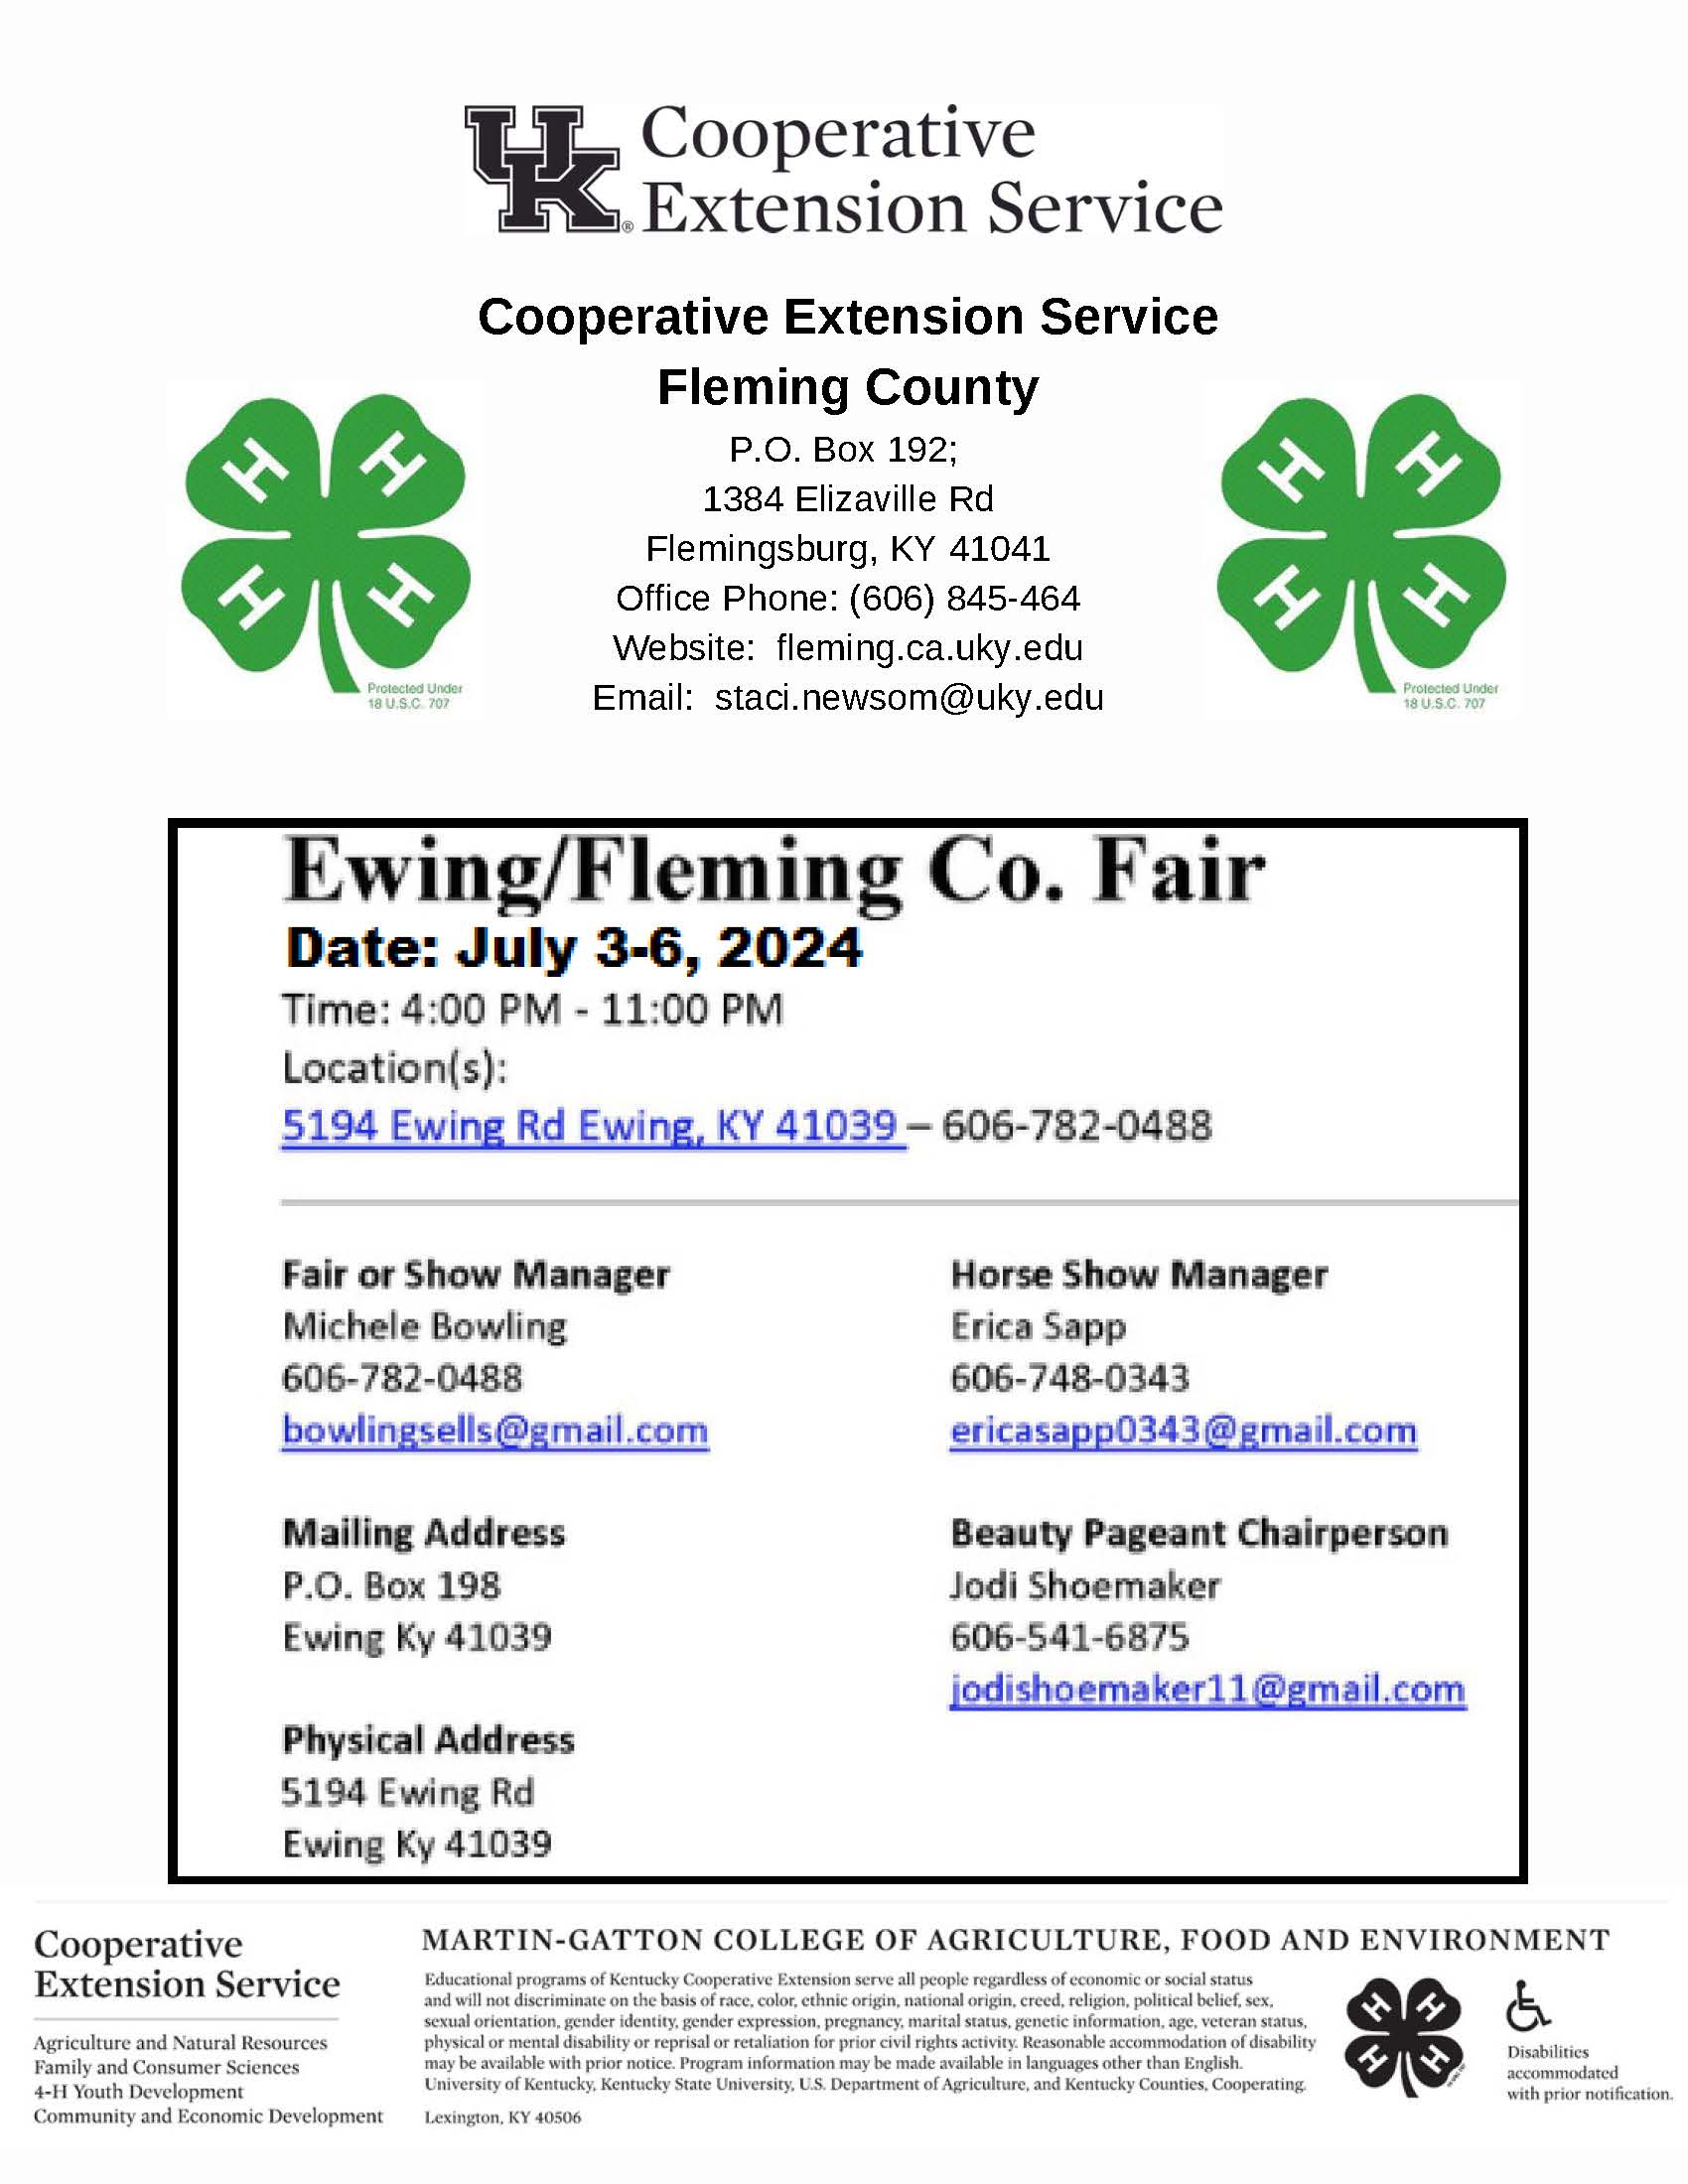 Ewing- Fleming County Fair info